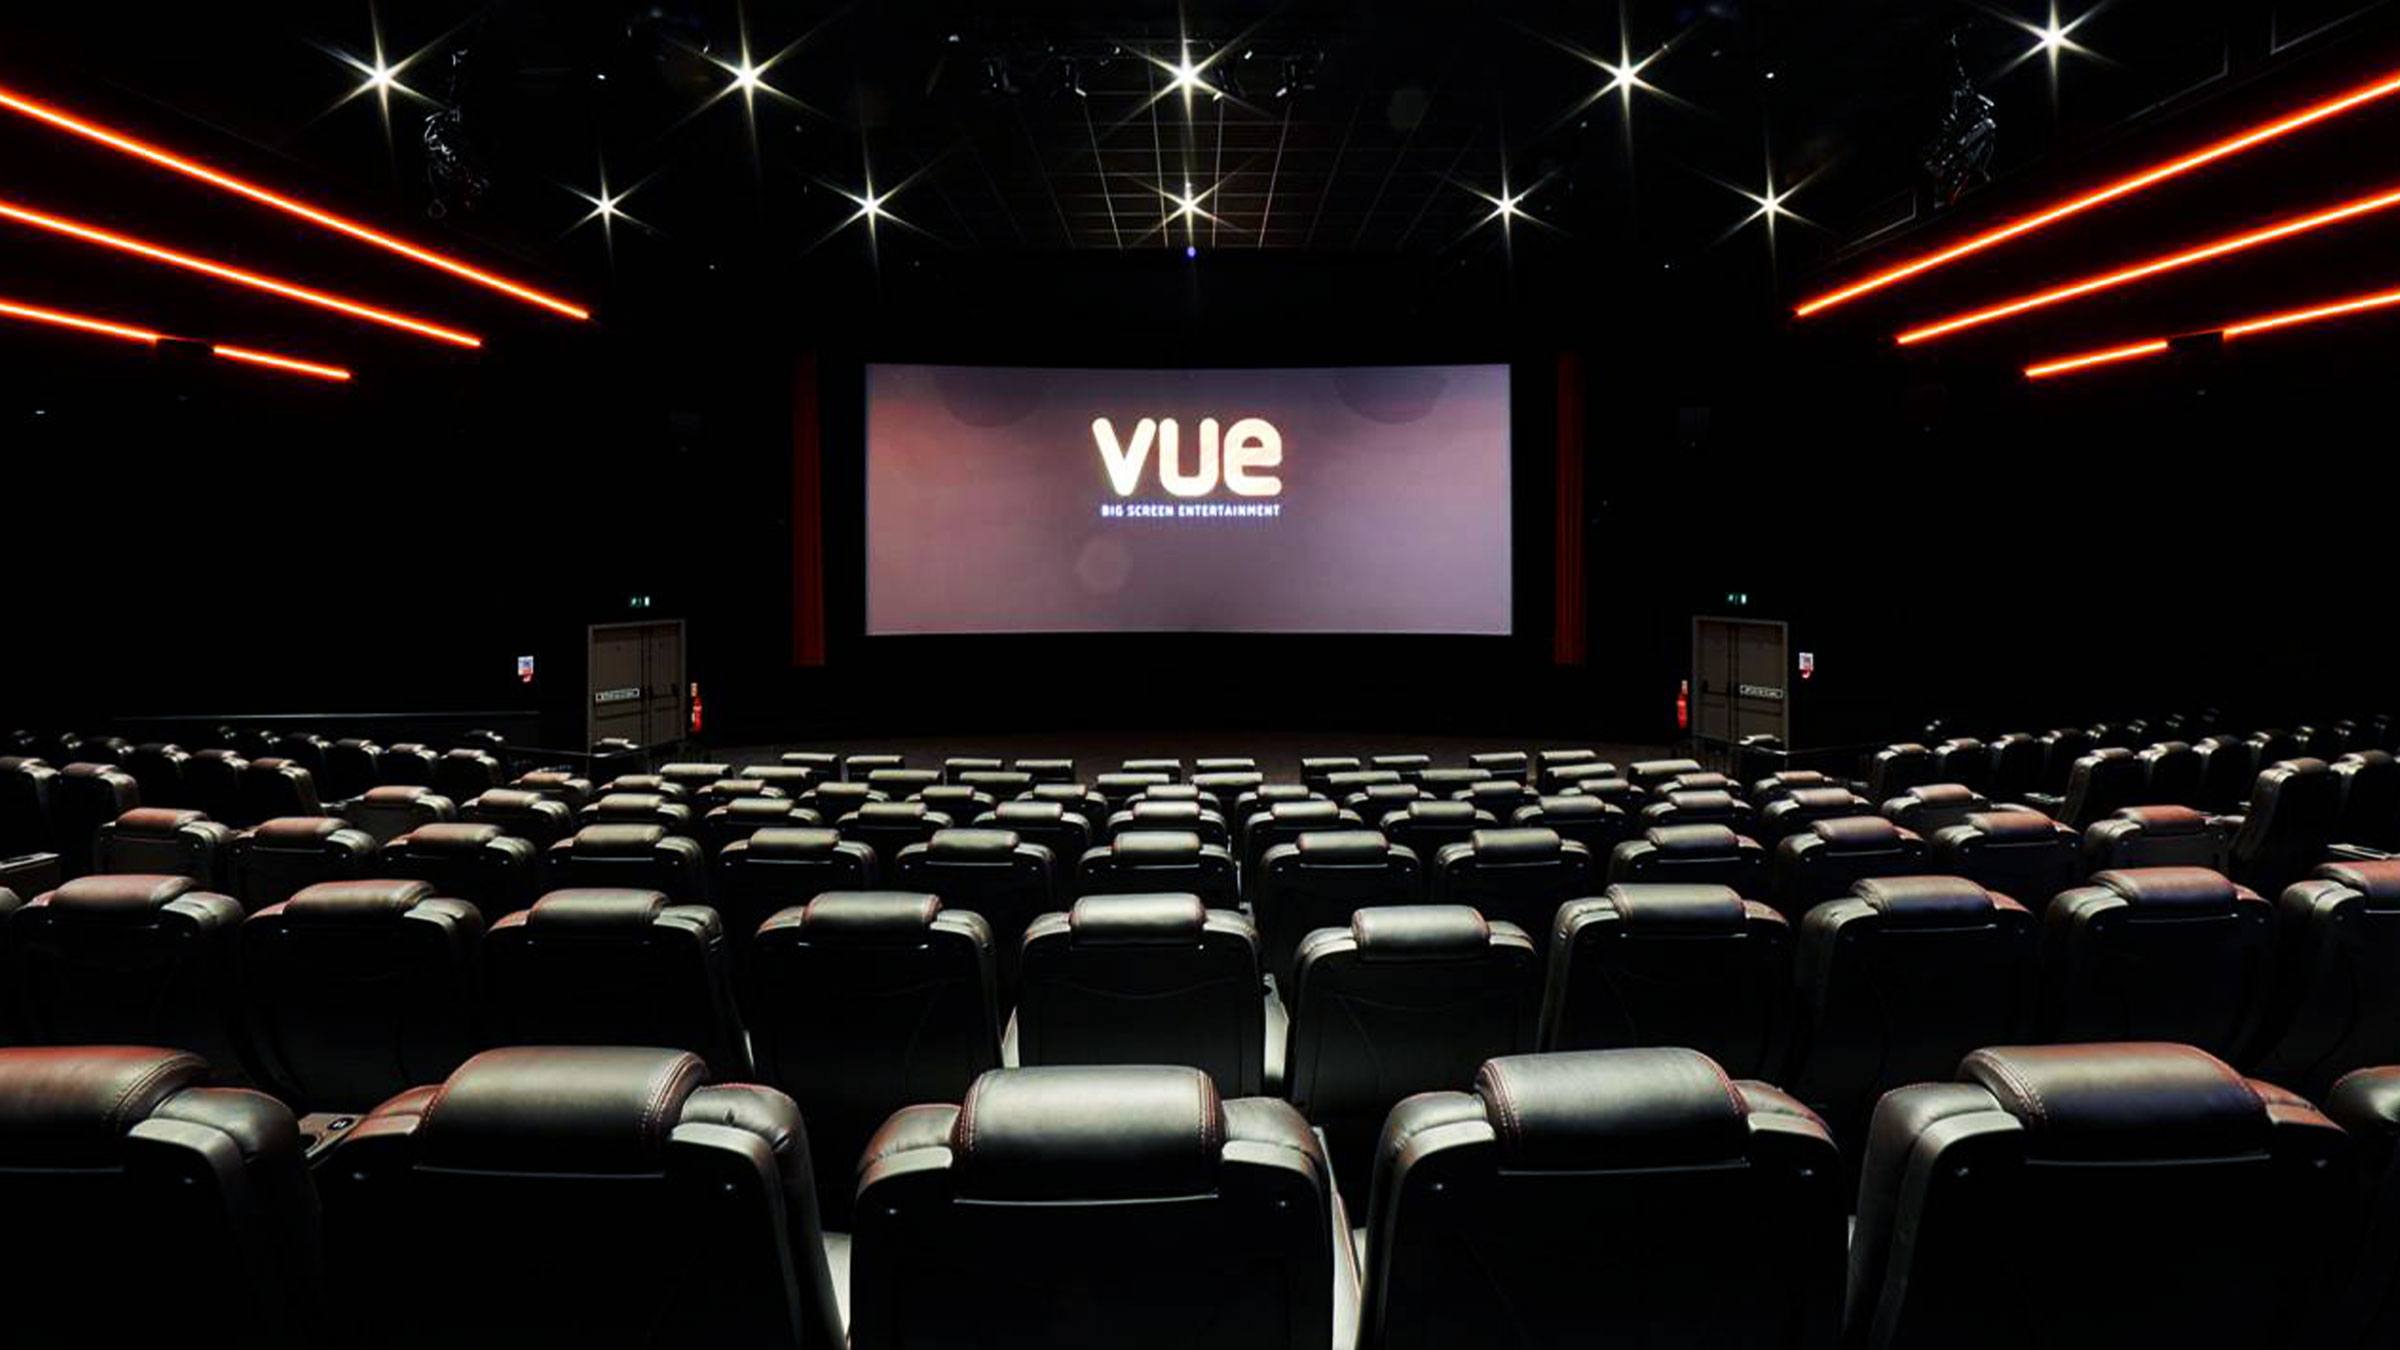 Cinema: a promising future Vue?